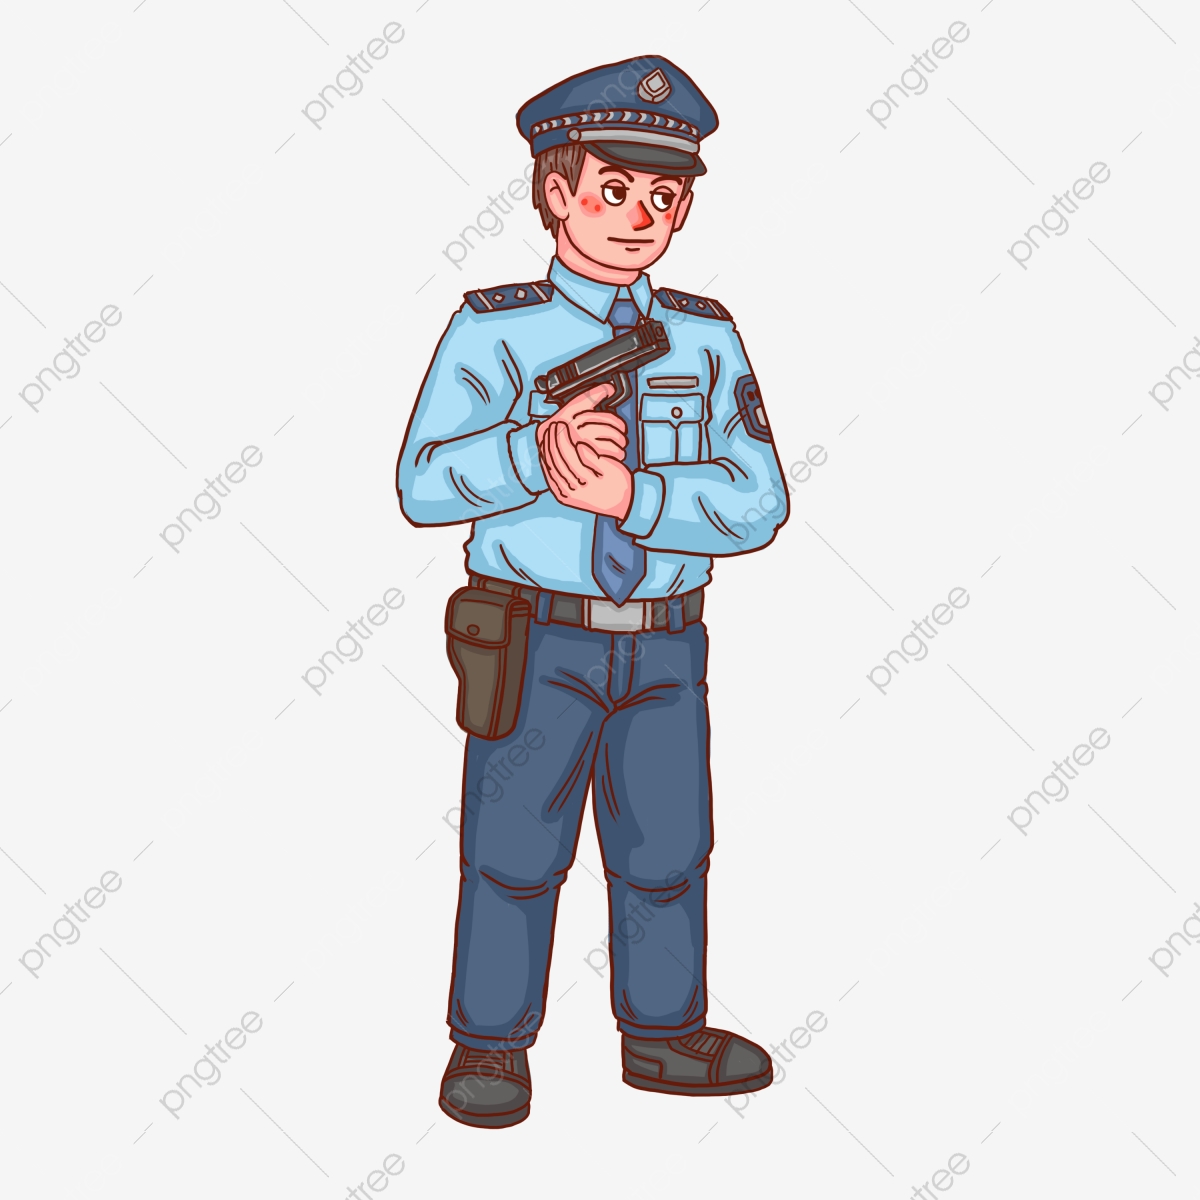 Policeman clipart police training, Policeman police training